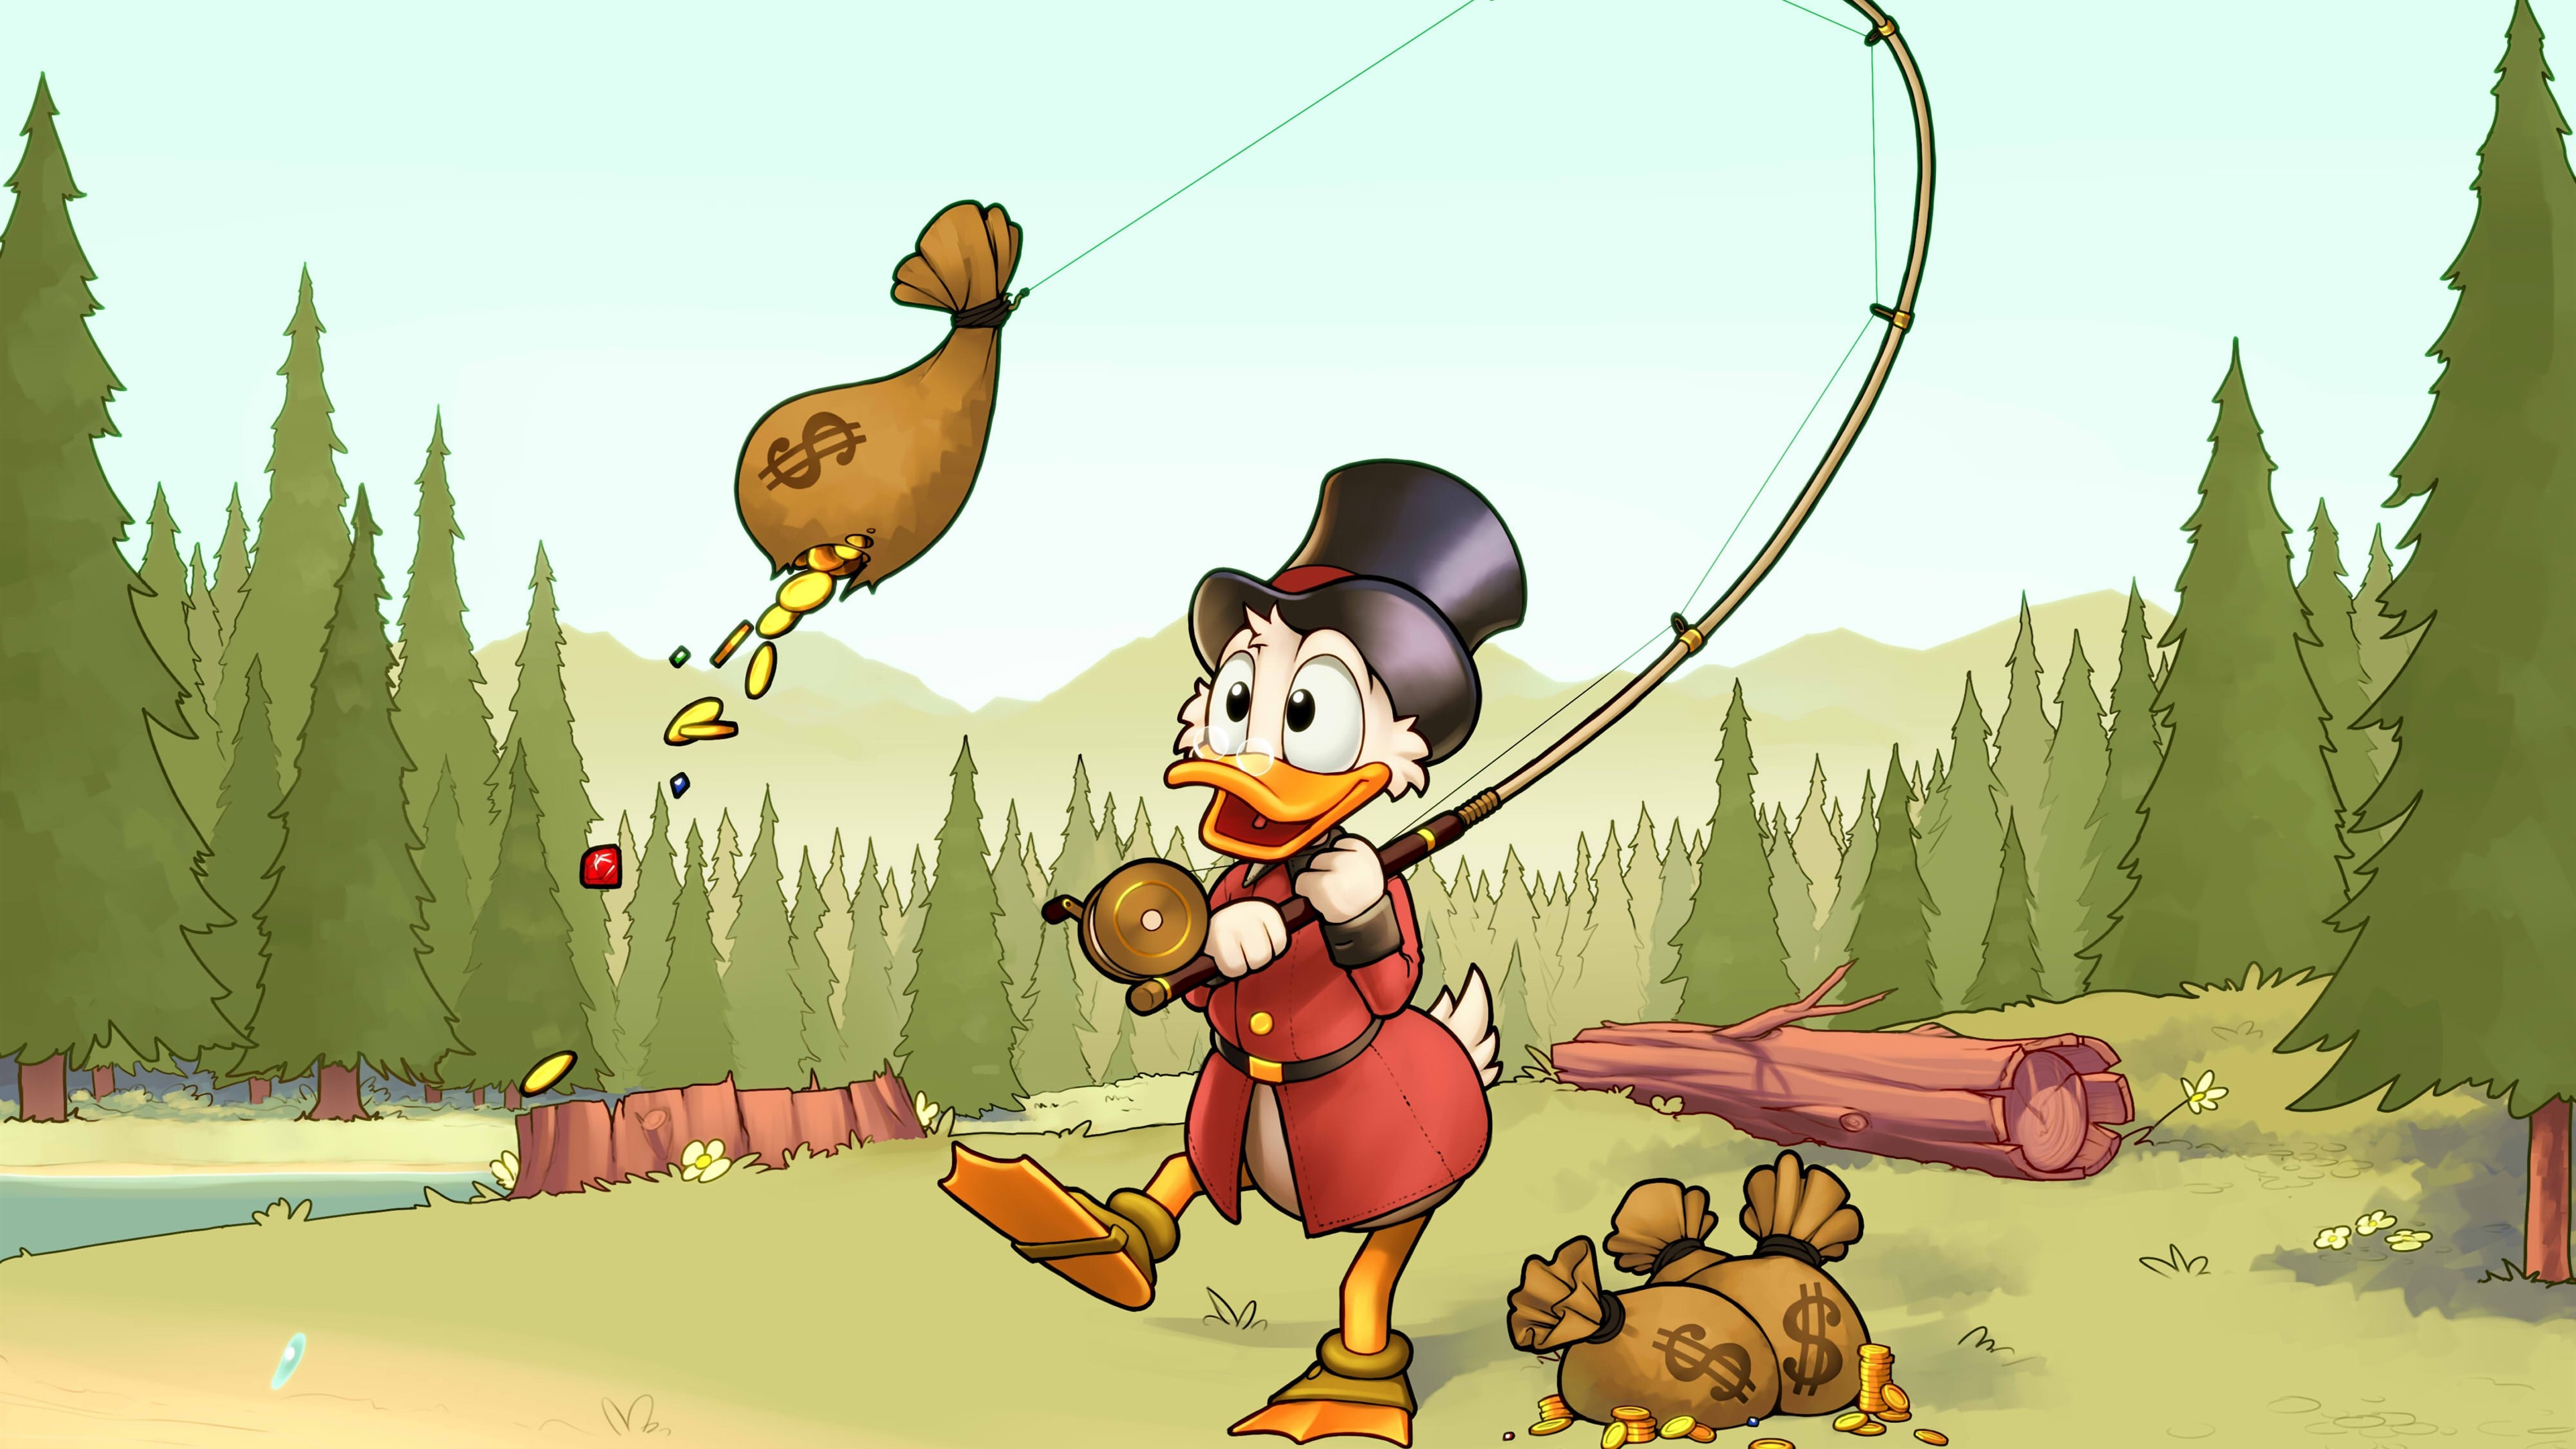 Wallpapers Donald Duck, fishing money, Disney cartoon 3840x2160 UHD 4K Picture, Image